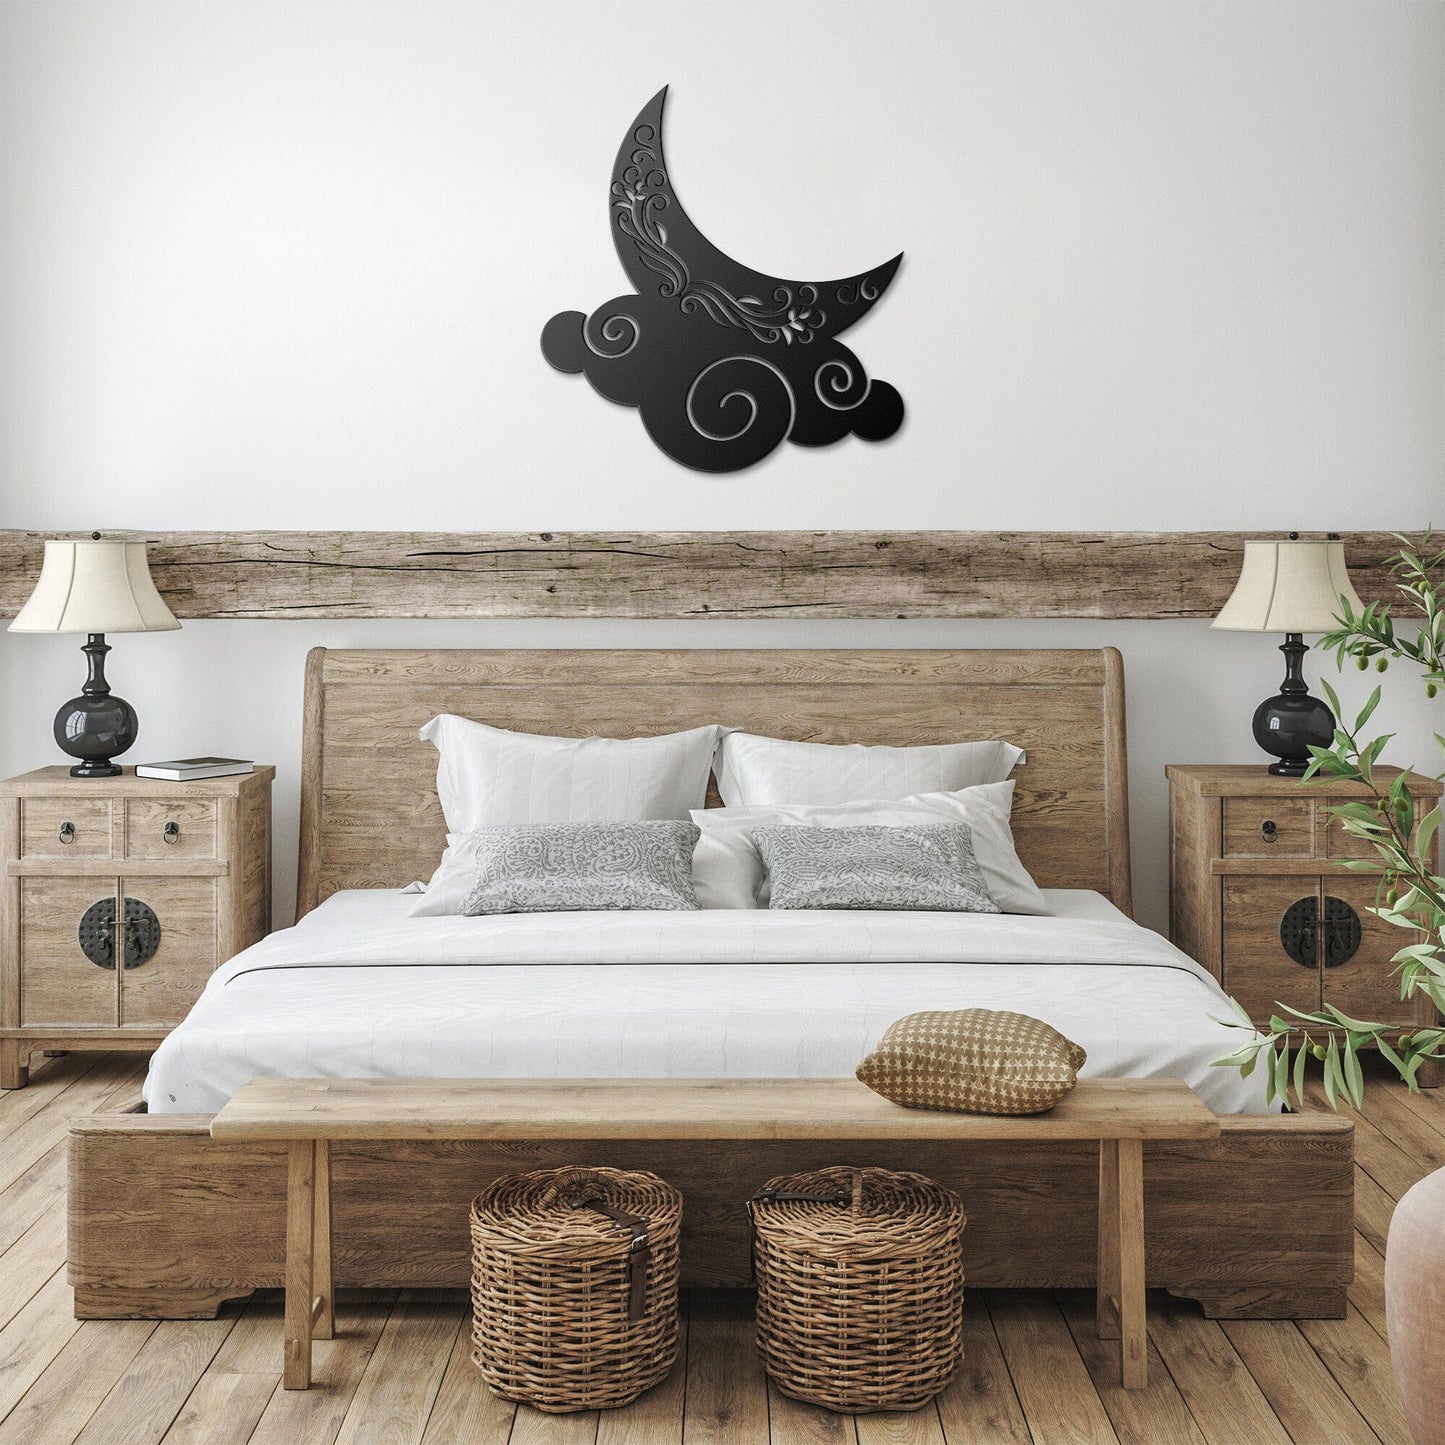 Whimsical crescent Moon Decorative metal wall art